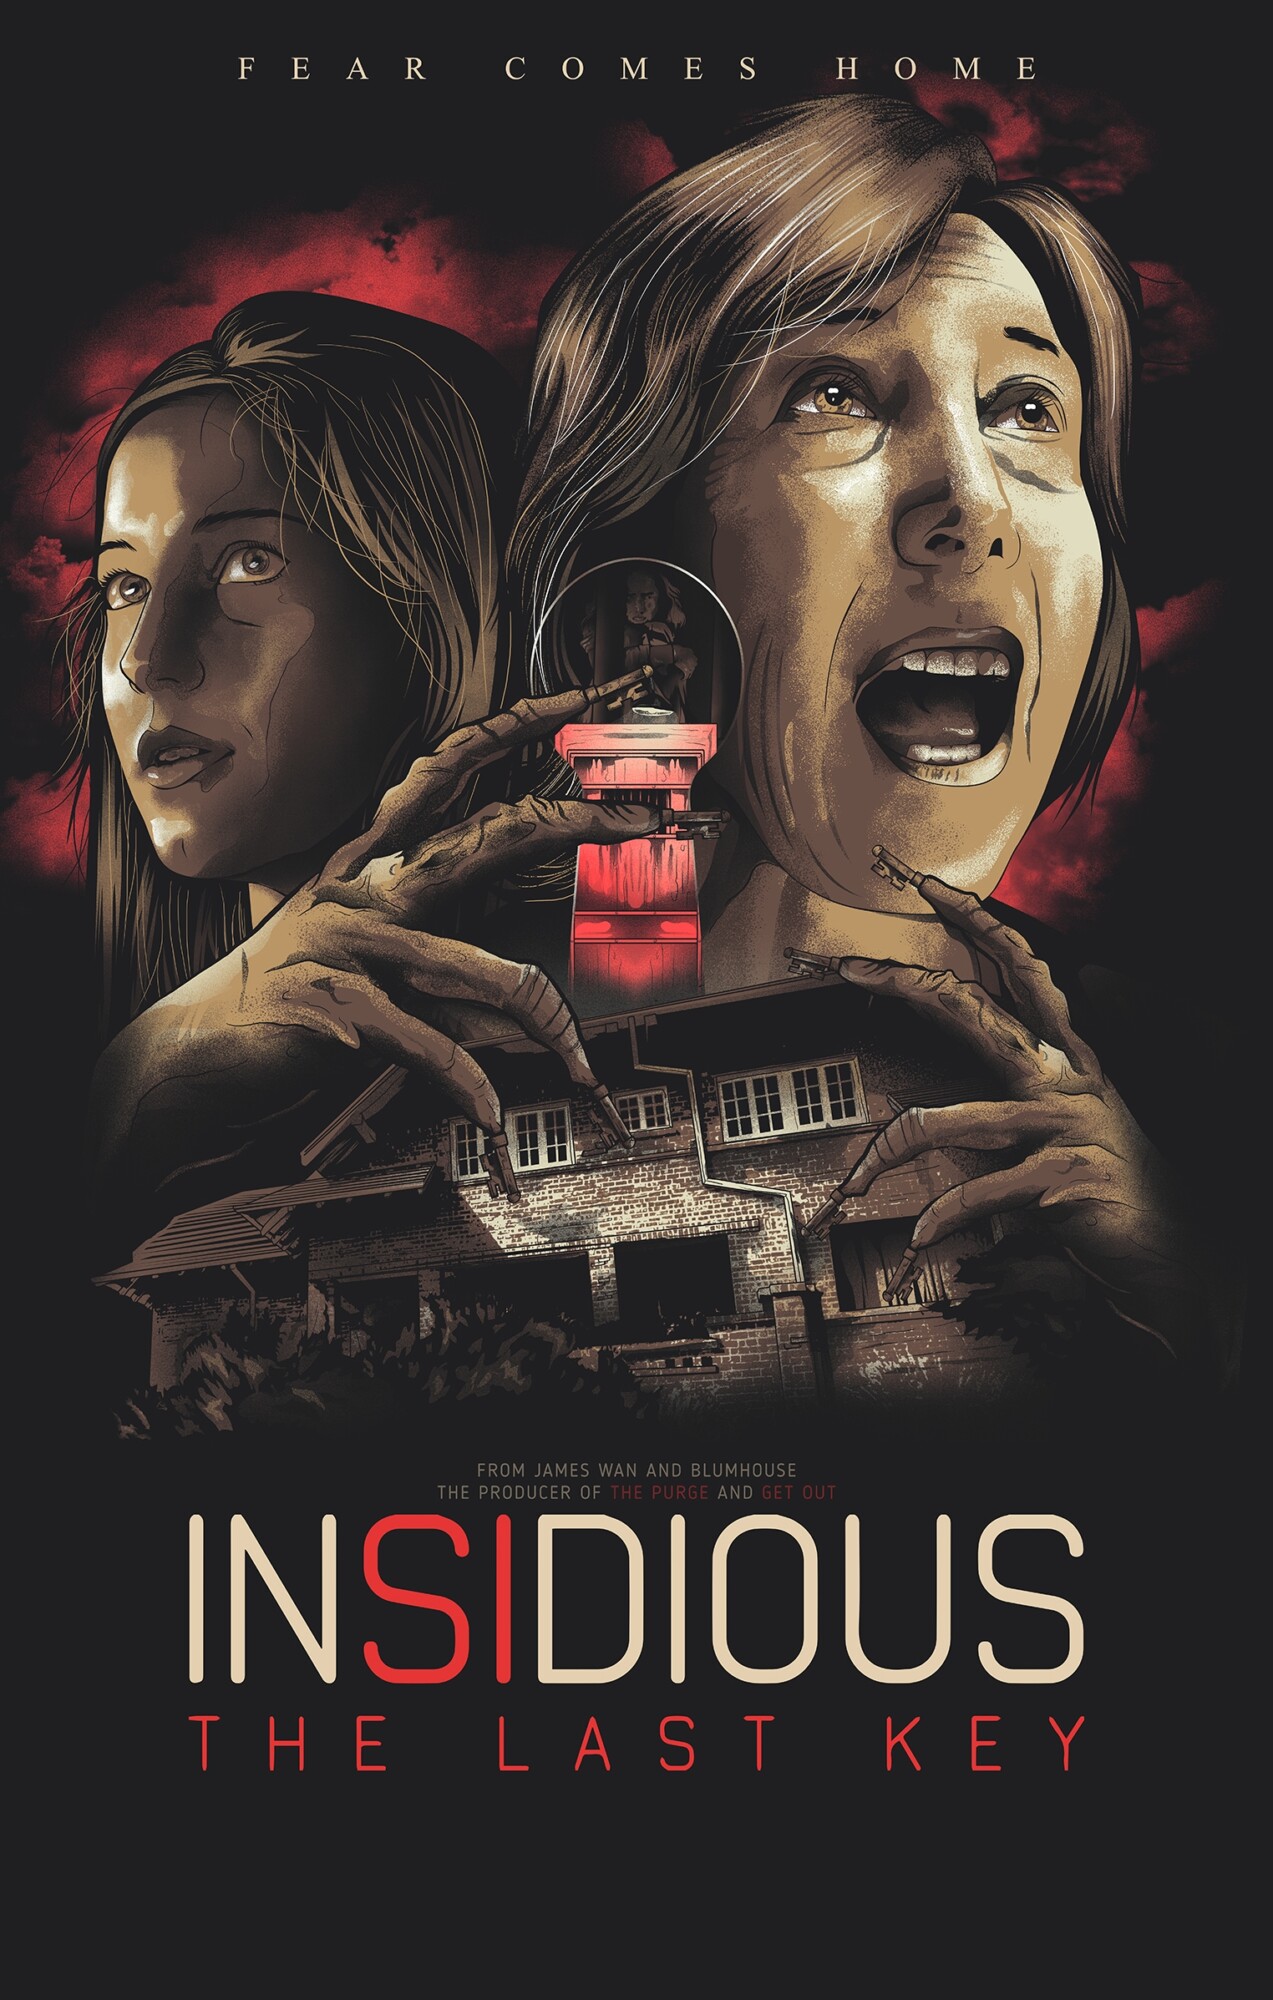 Insidious: The Last Key poster-ის სურათის შედეგი